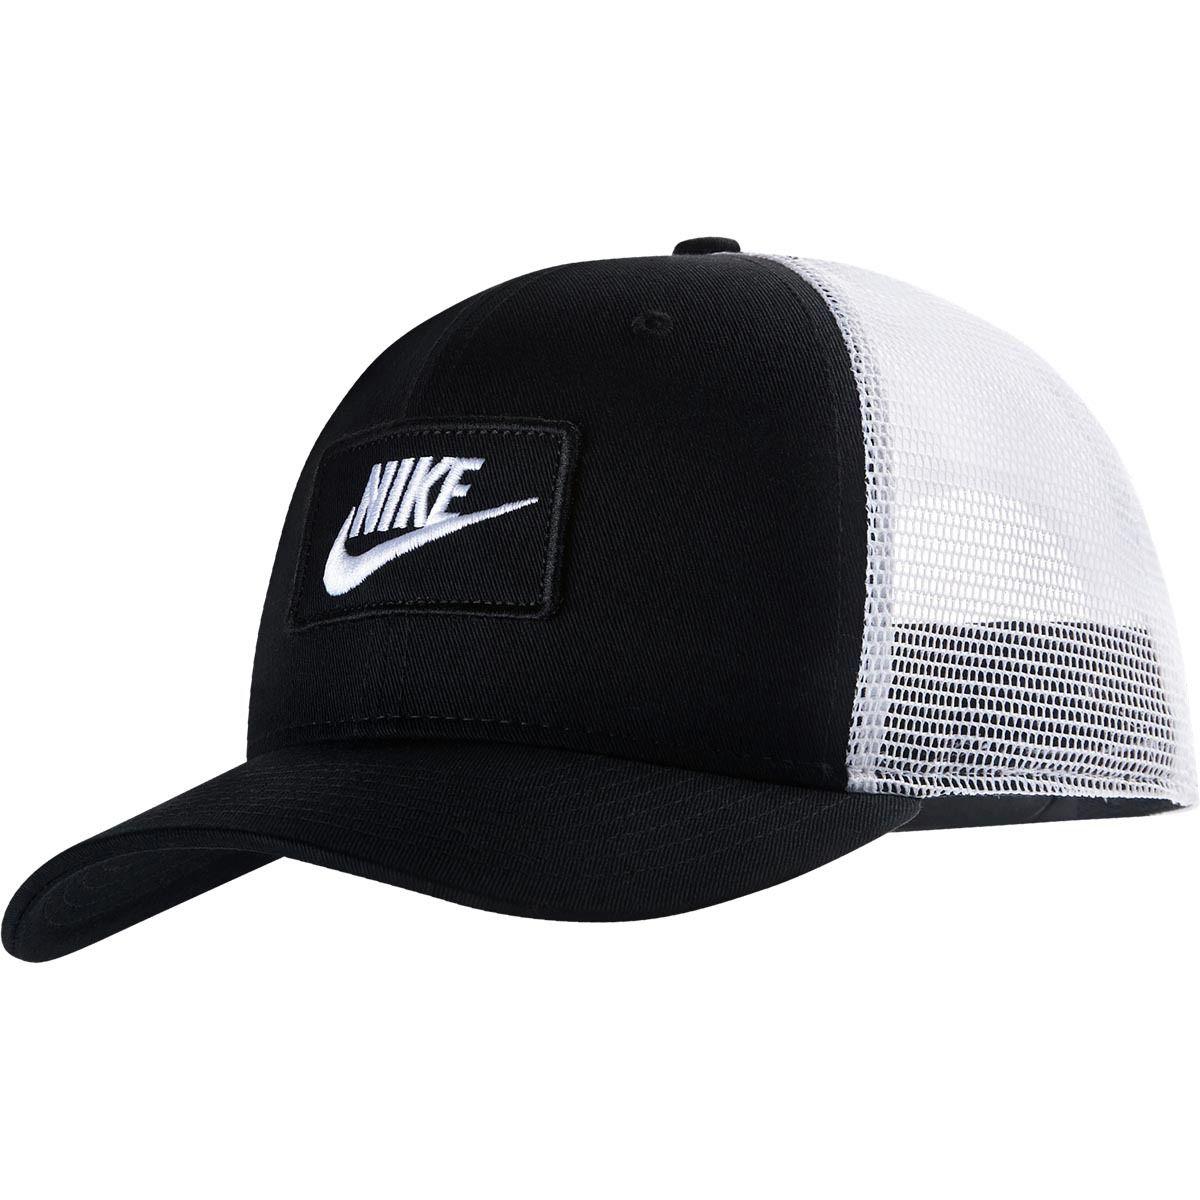 Nike Classic 99 Trucker Cap in Black for Men - Save 4% - Lyst